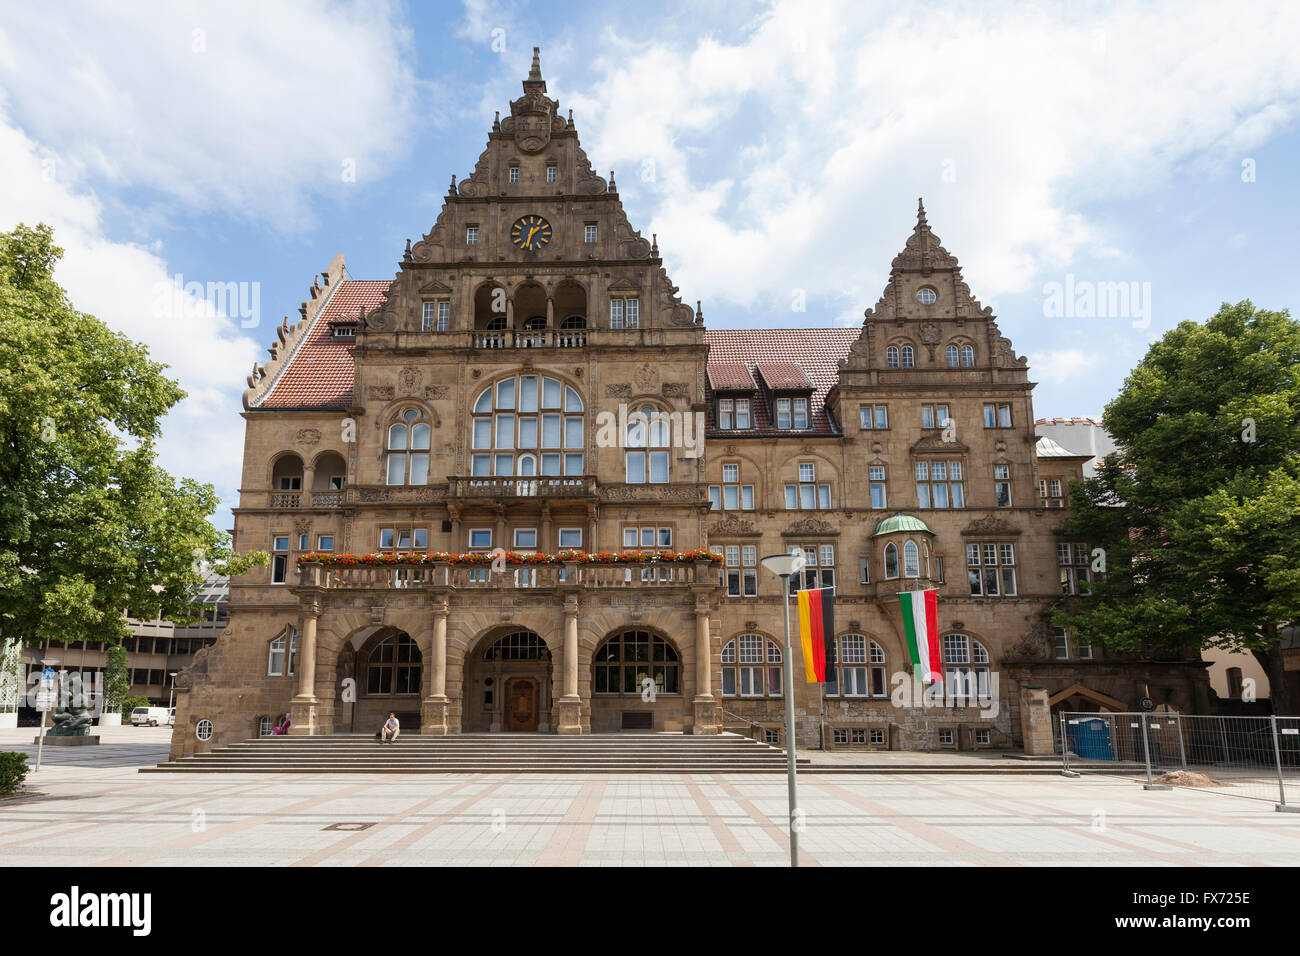 Old town hall, Bielefeld, North Rhine-Westphalia, Germany Stock Photo